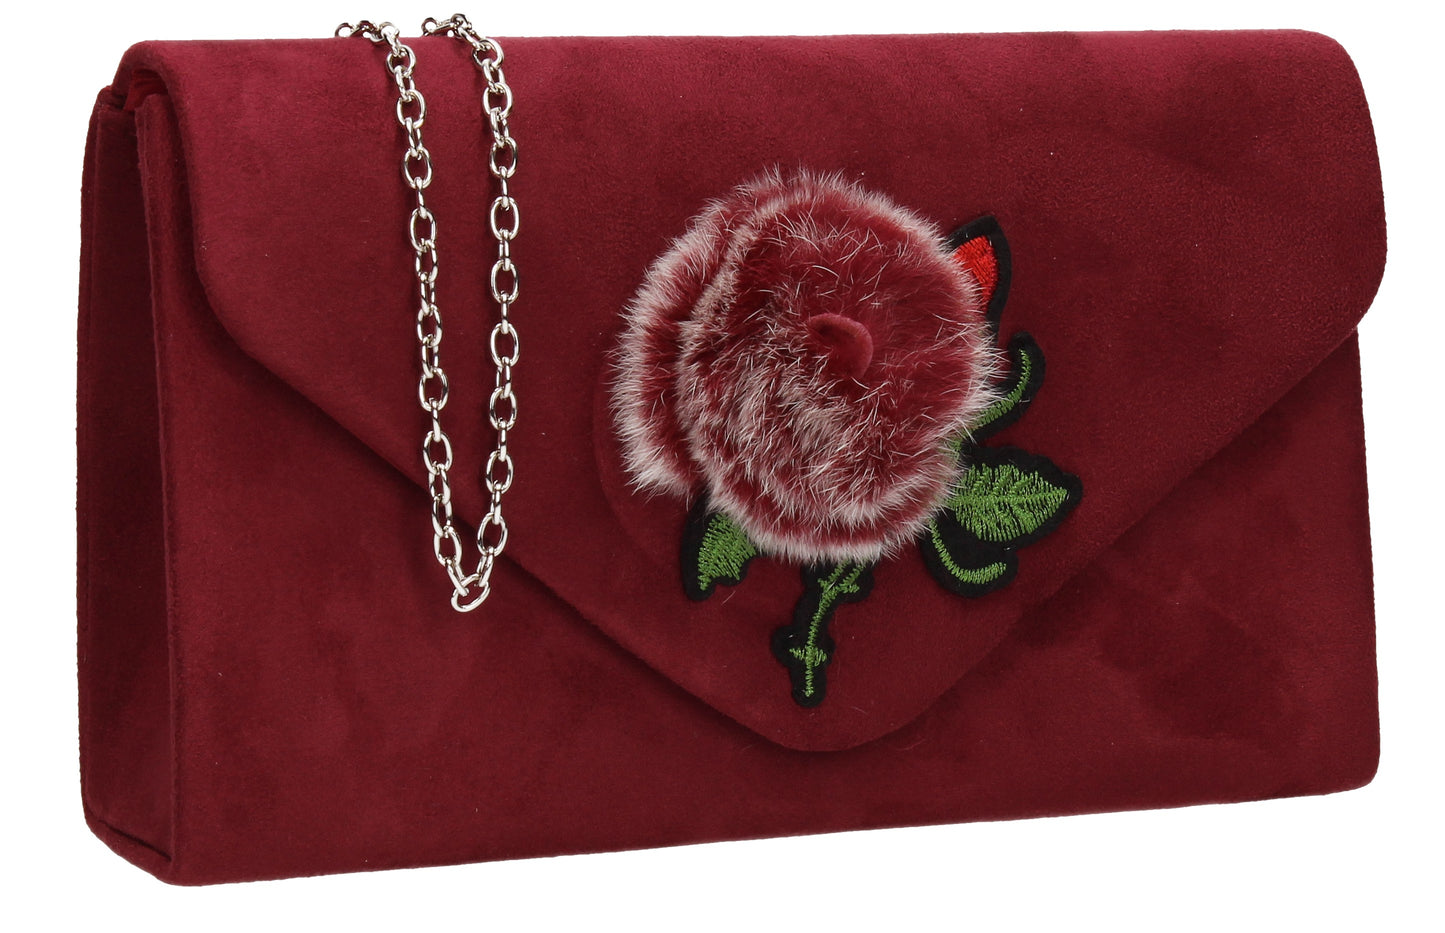 SWANKYSWANS Roxanne Fur Rose Clutch Bag Burgundy Cute Cheap Clutch Bag For Weddings School and Work